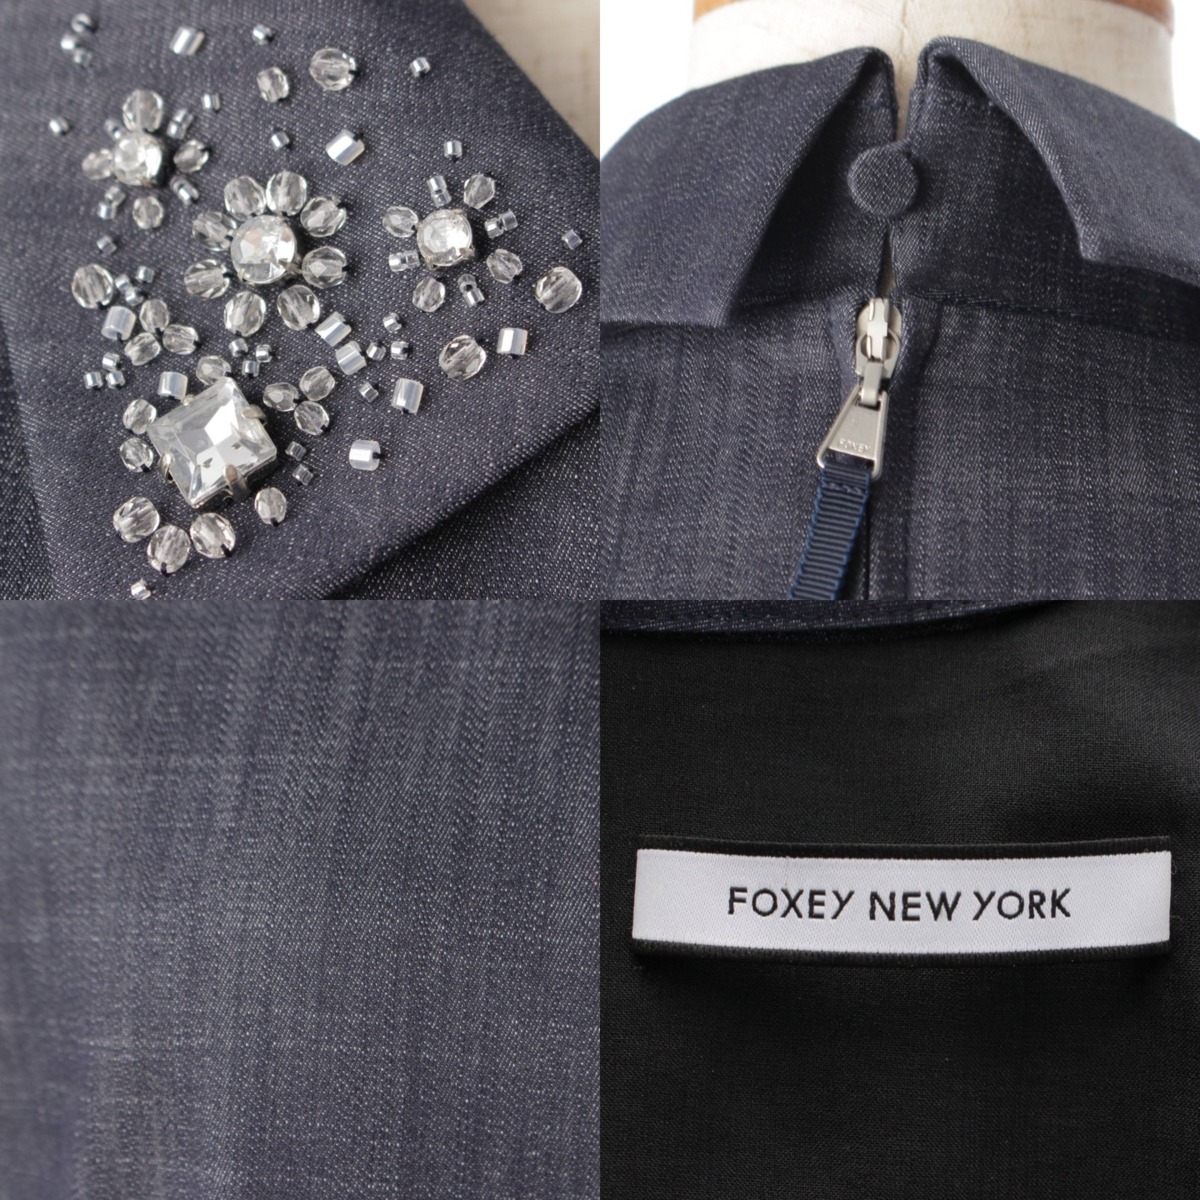 FOXEY NEW YORK ワンピース パレーブルボン 襟付き ブラック 40-